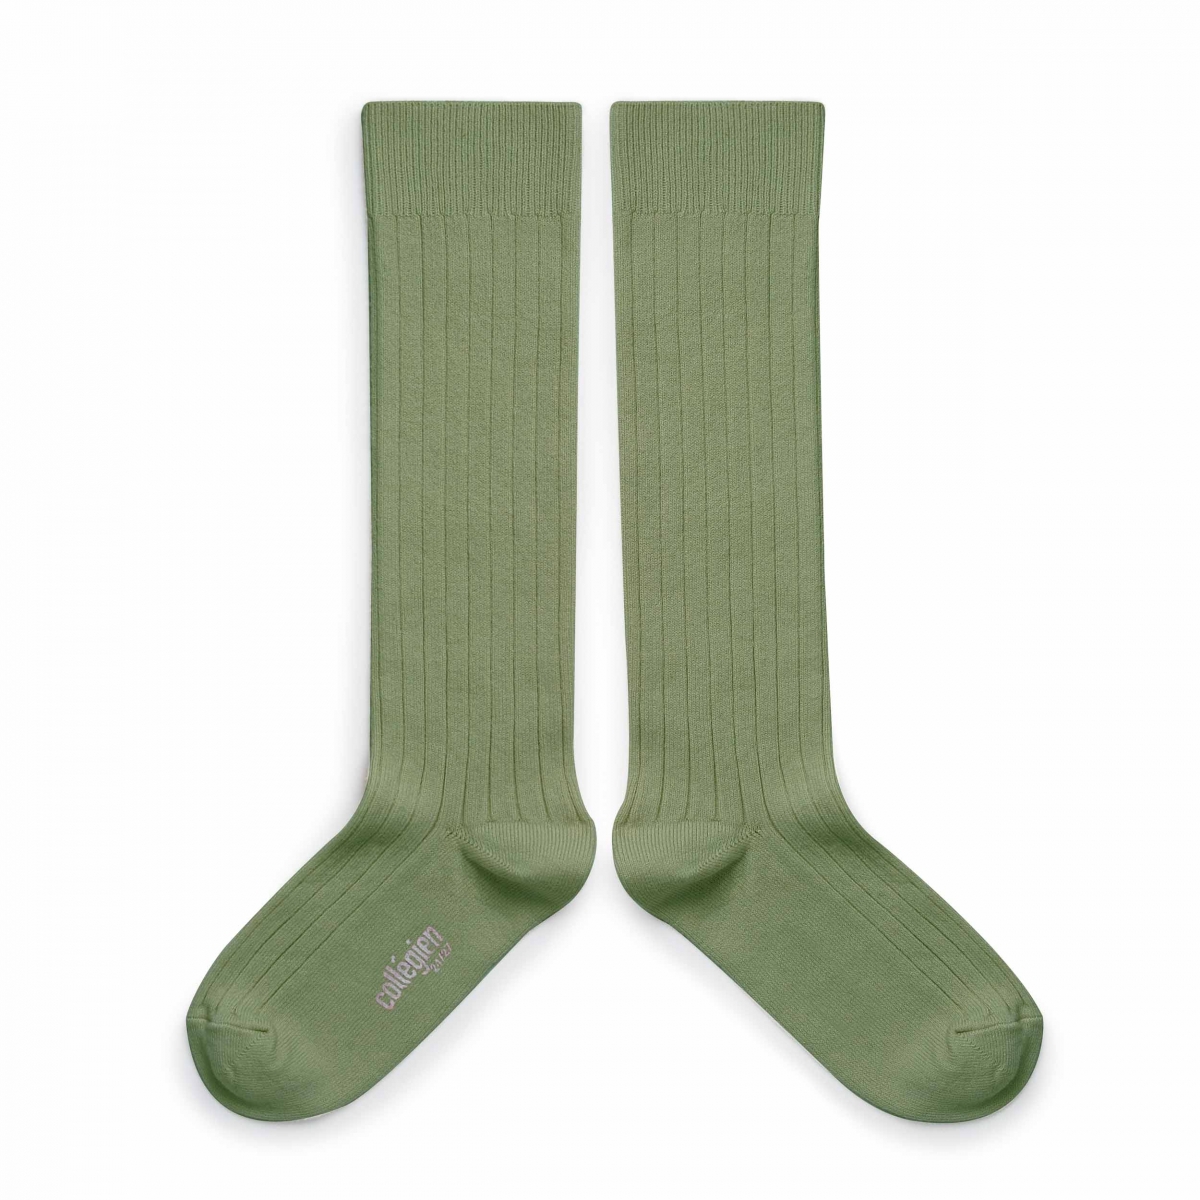 Collégien - Knee high socks La Haute sauge - Medias y calcetines - 2950 188 La Haute 